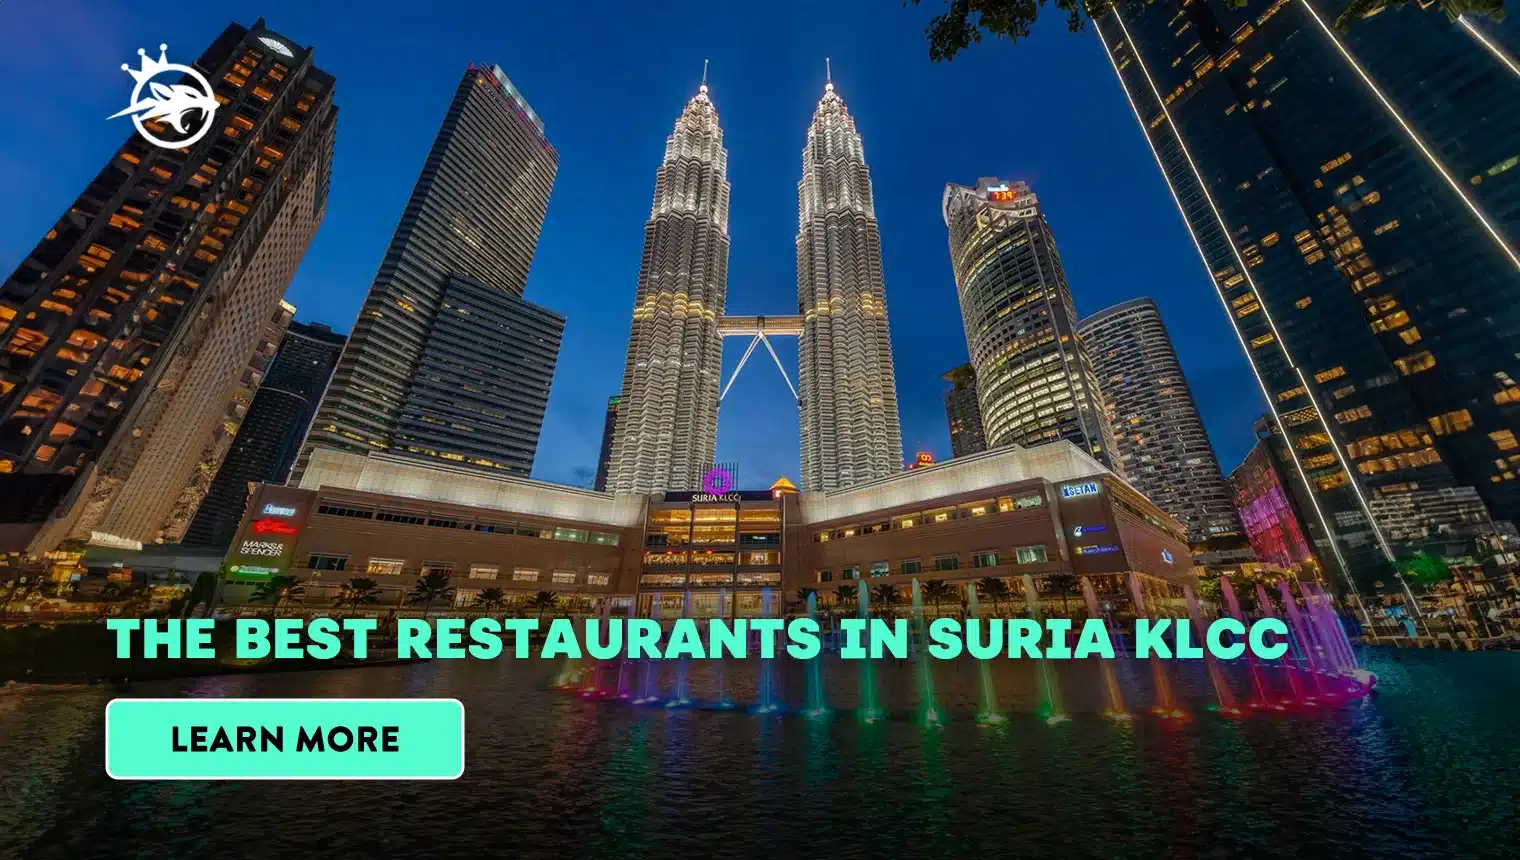 The Best Restaurants in Suria KLCC